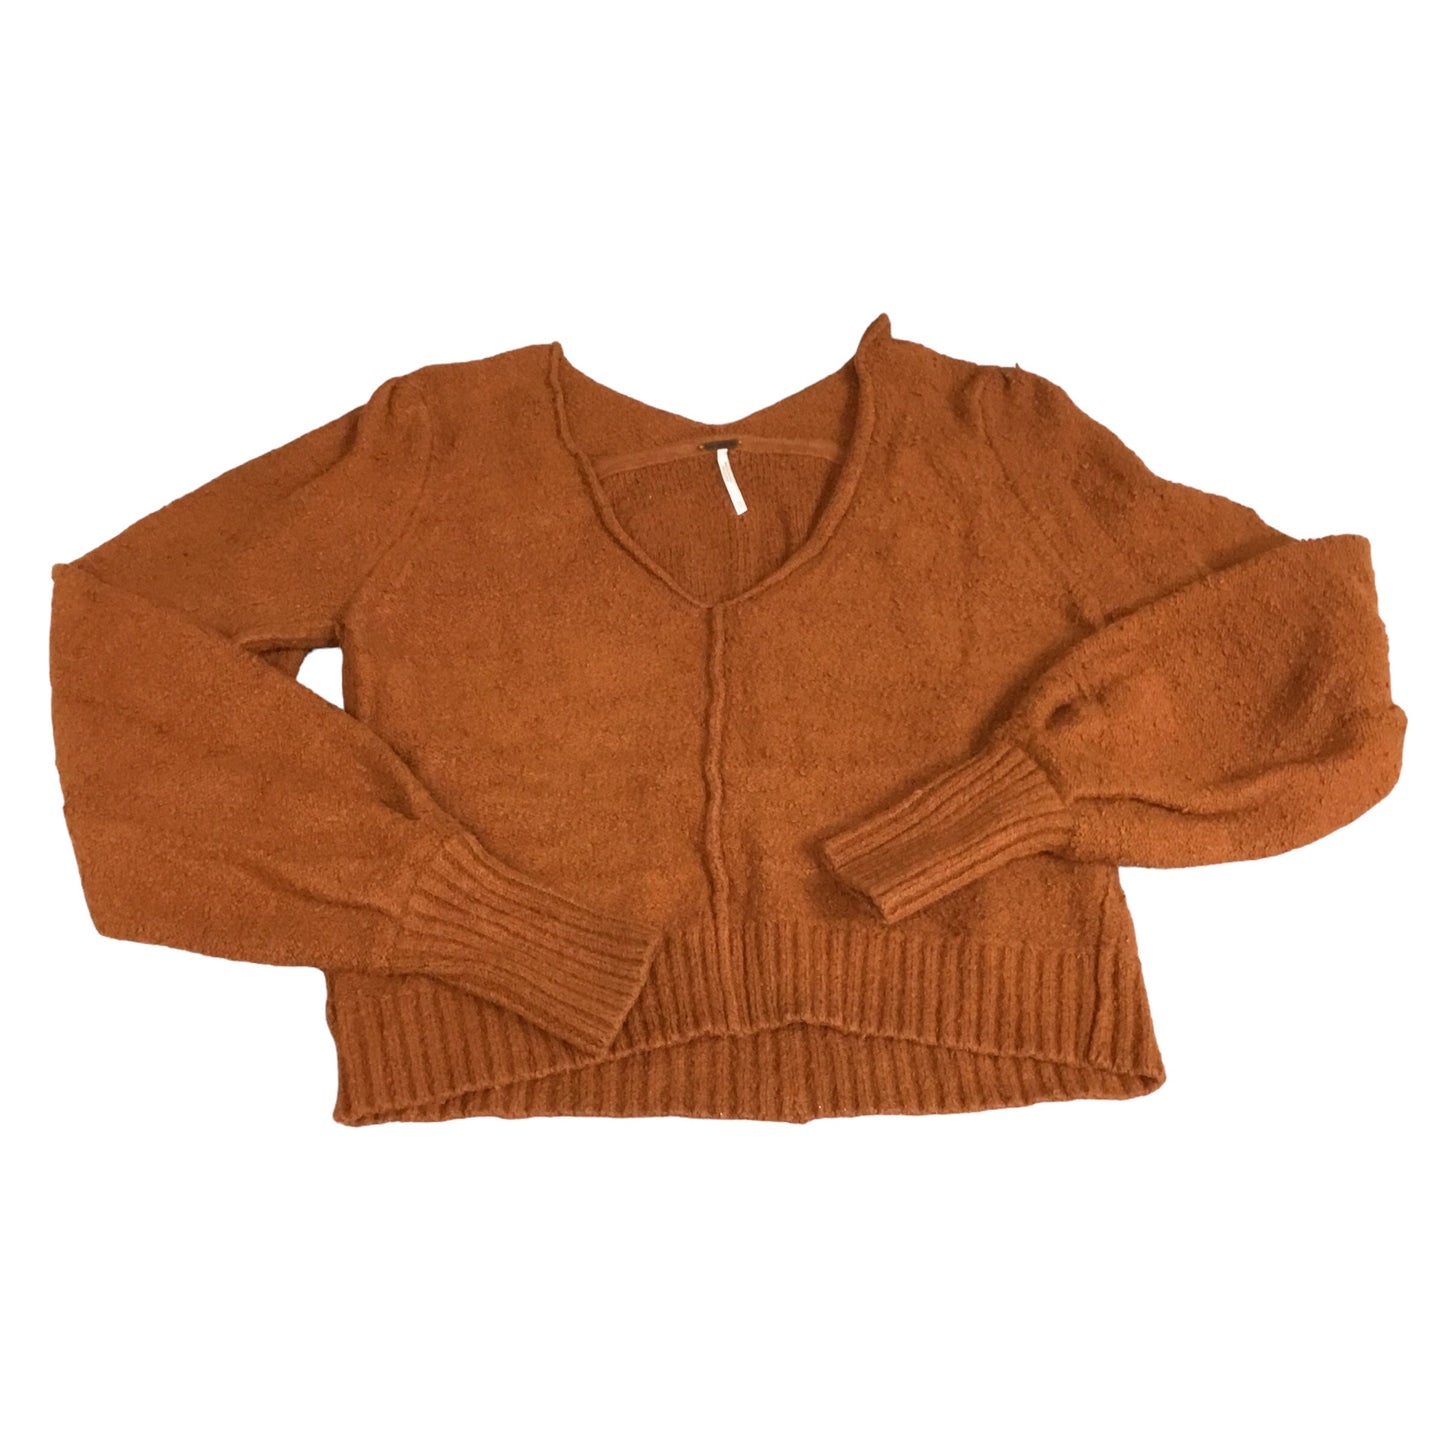 Rust Sweater Free People, Size Xs